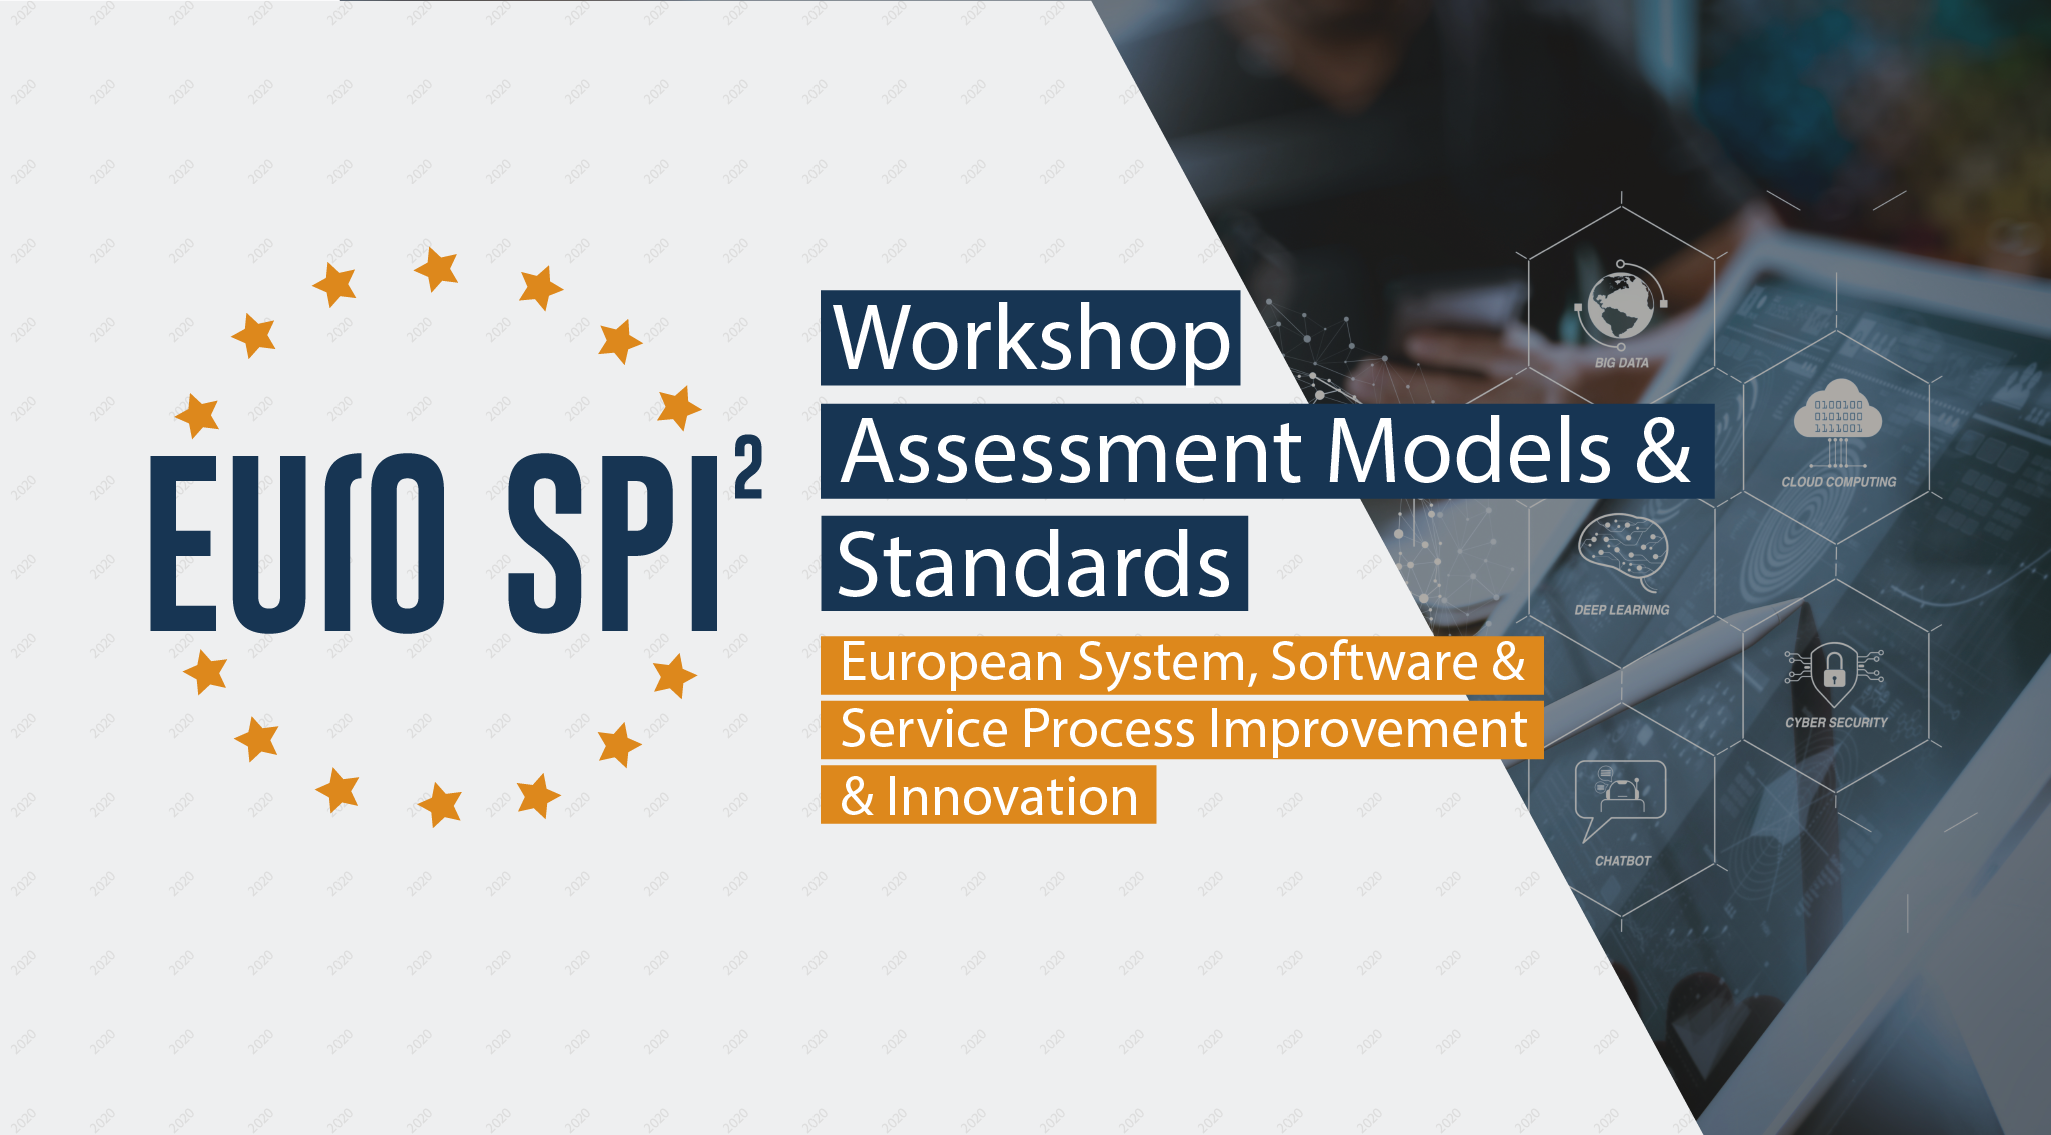 Standards and Assessment Models